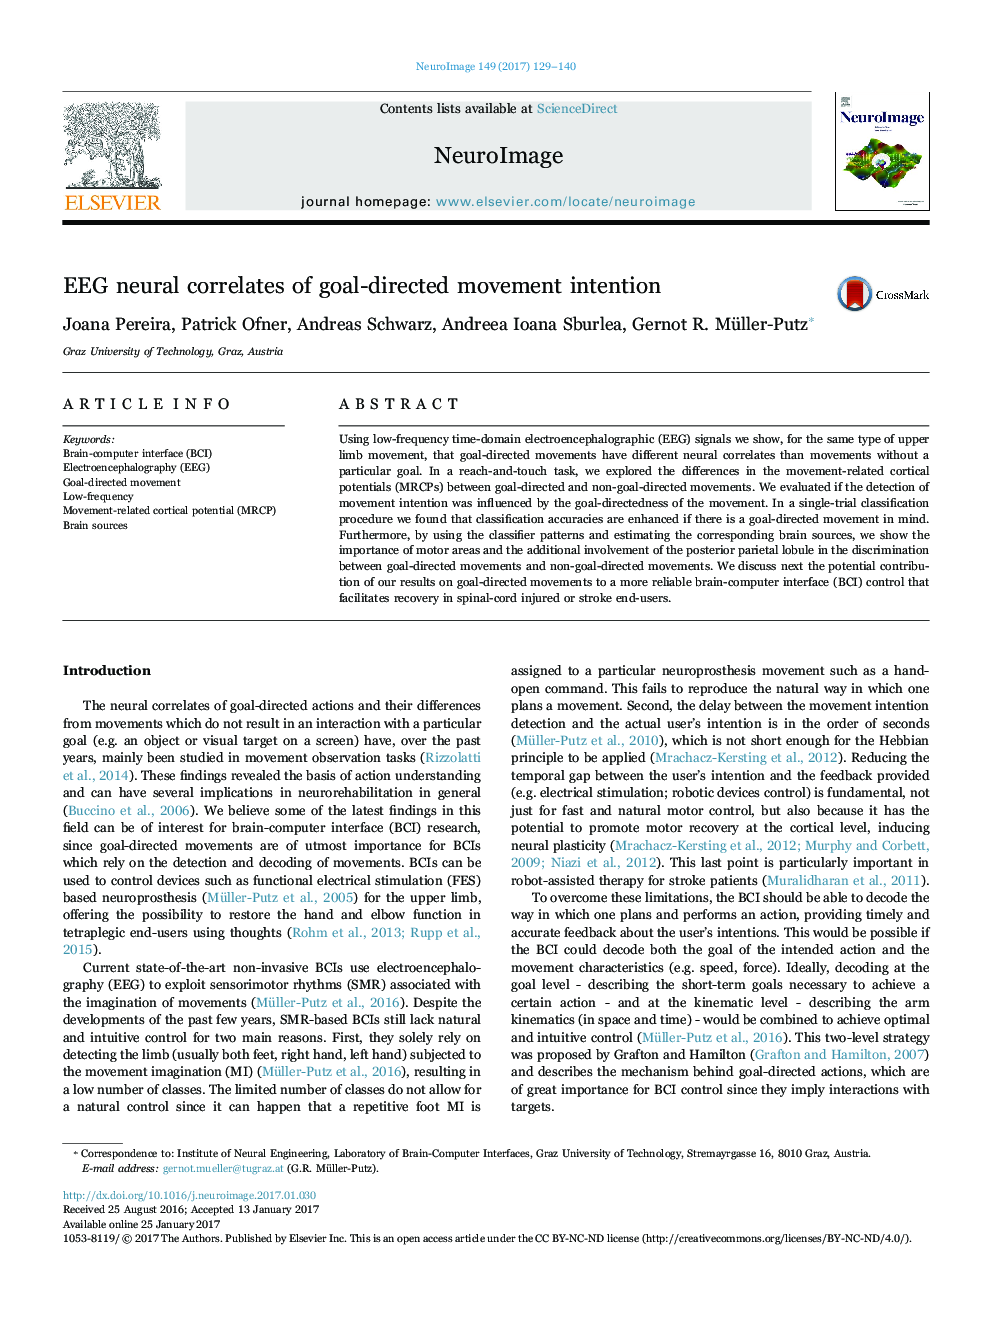 EEG neural correlates of goal-directed movement intention